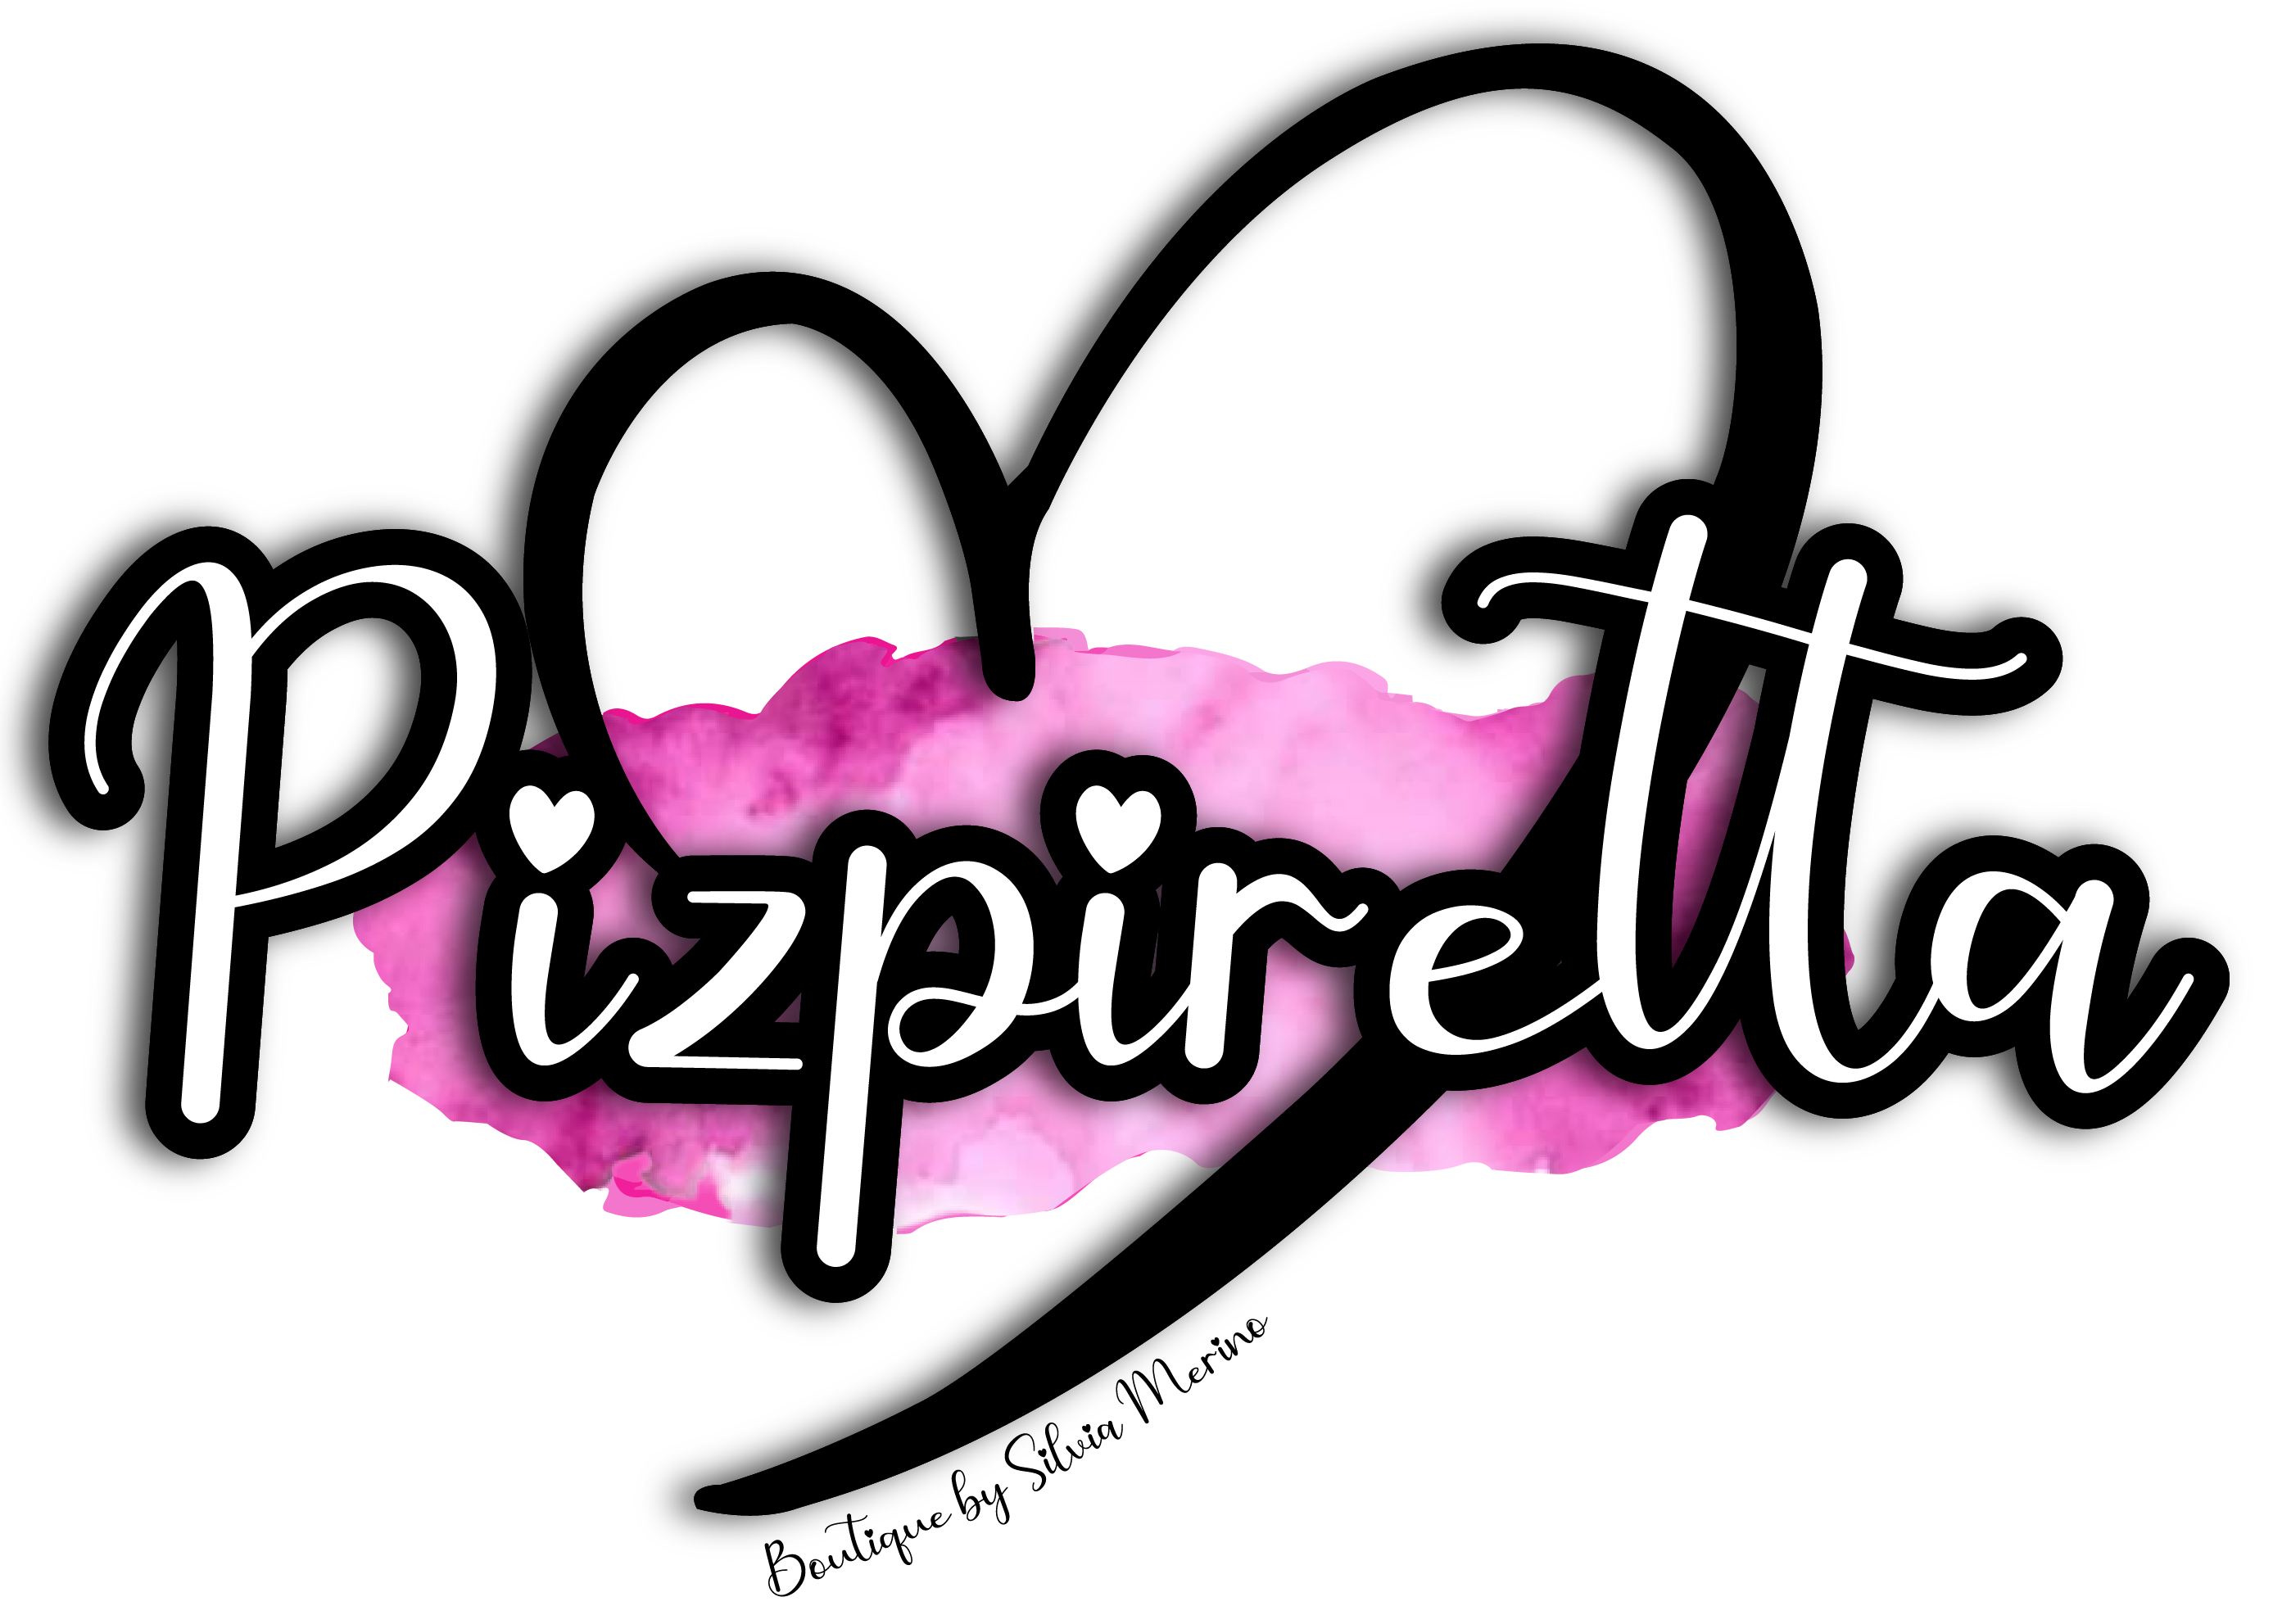 Pizpiretta boutique